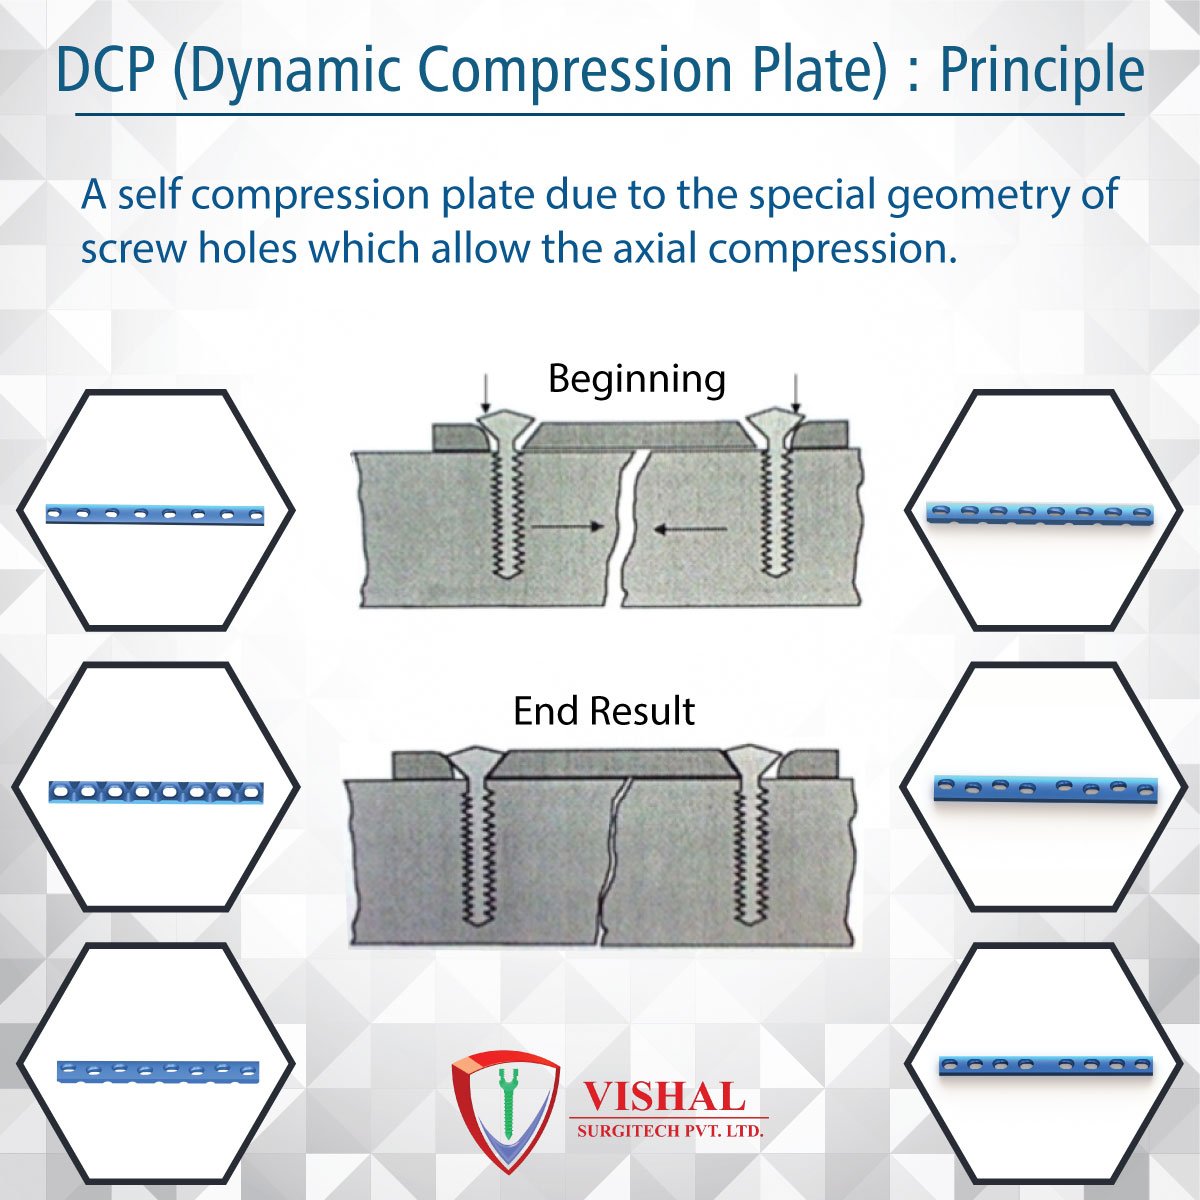 X-এ Vishal surgitech: DCP (Dynamic Compression Plate) Principle  #VishalSurgitech #DCP #Principle #SelfCompression #ScrewHoles  #AxialCompression  / X